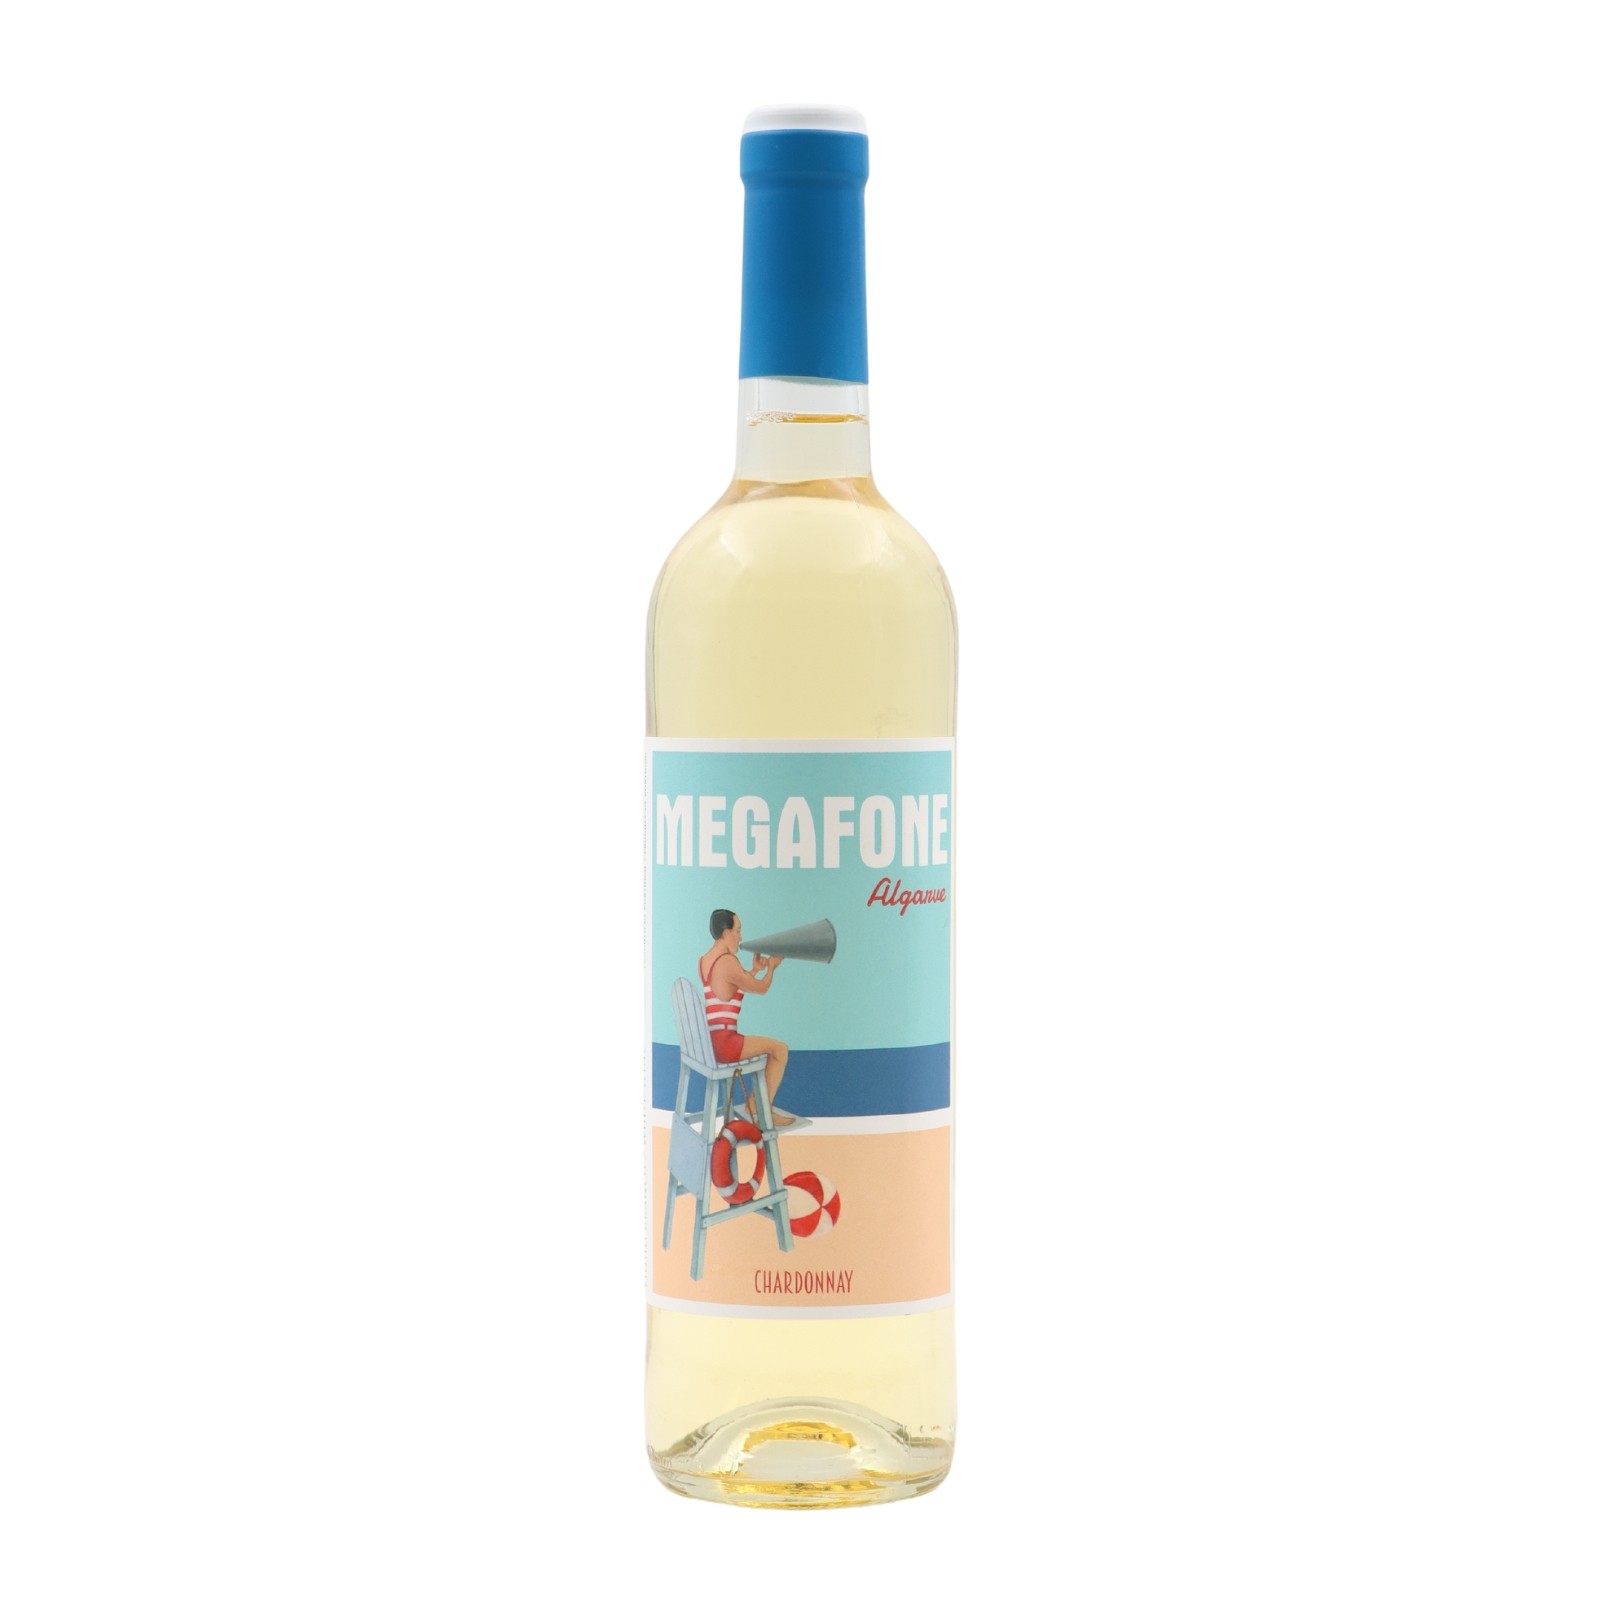 Megafone Chardonnay Bianco 2021